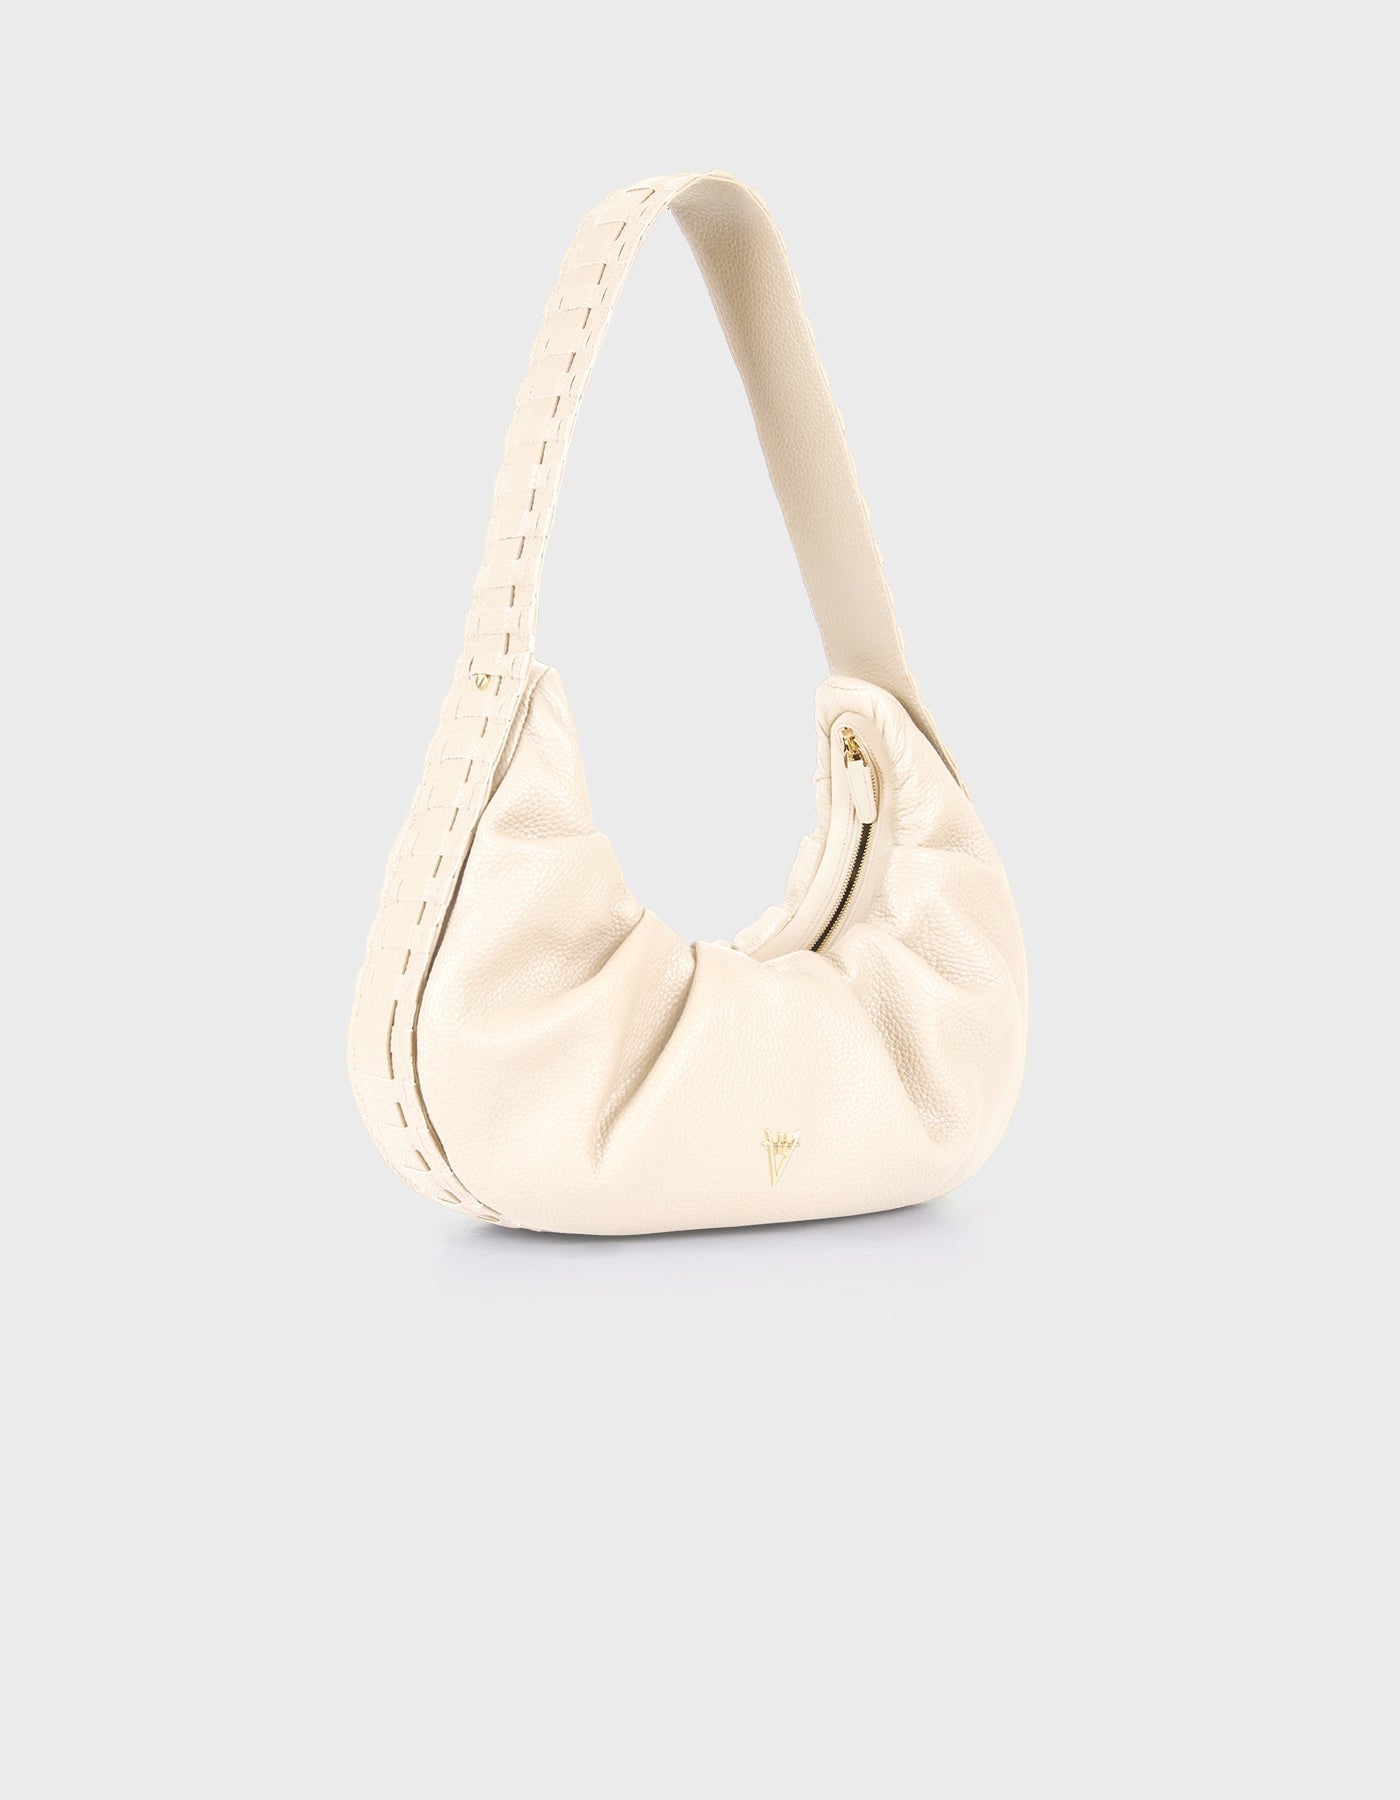 HiVa Atelier | Croissant Bag Bone | Beautiful and Versatile